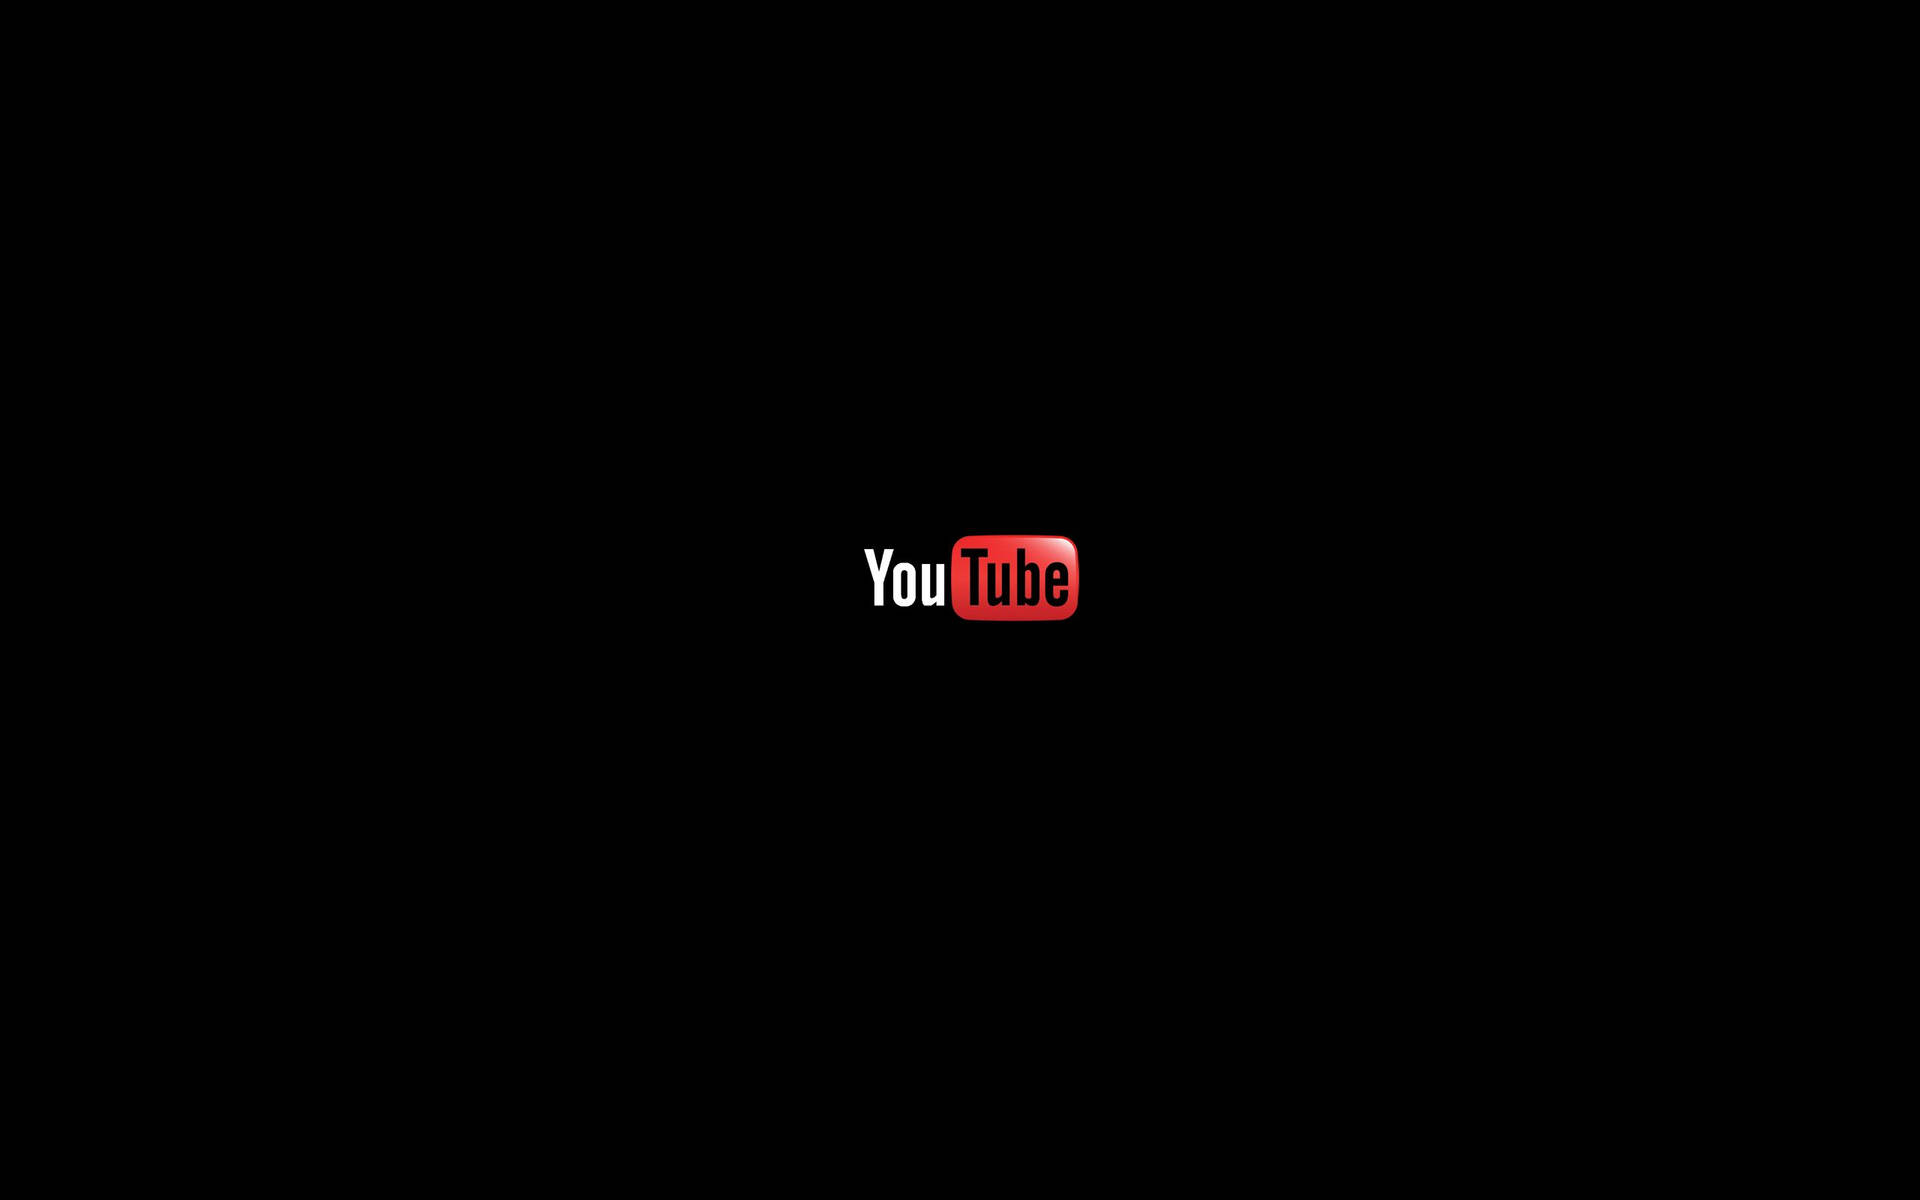 Mini Youtube Logo In Black Background